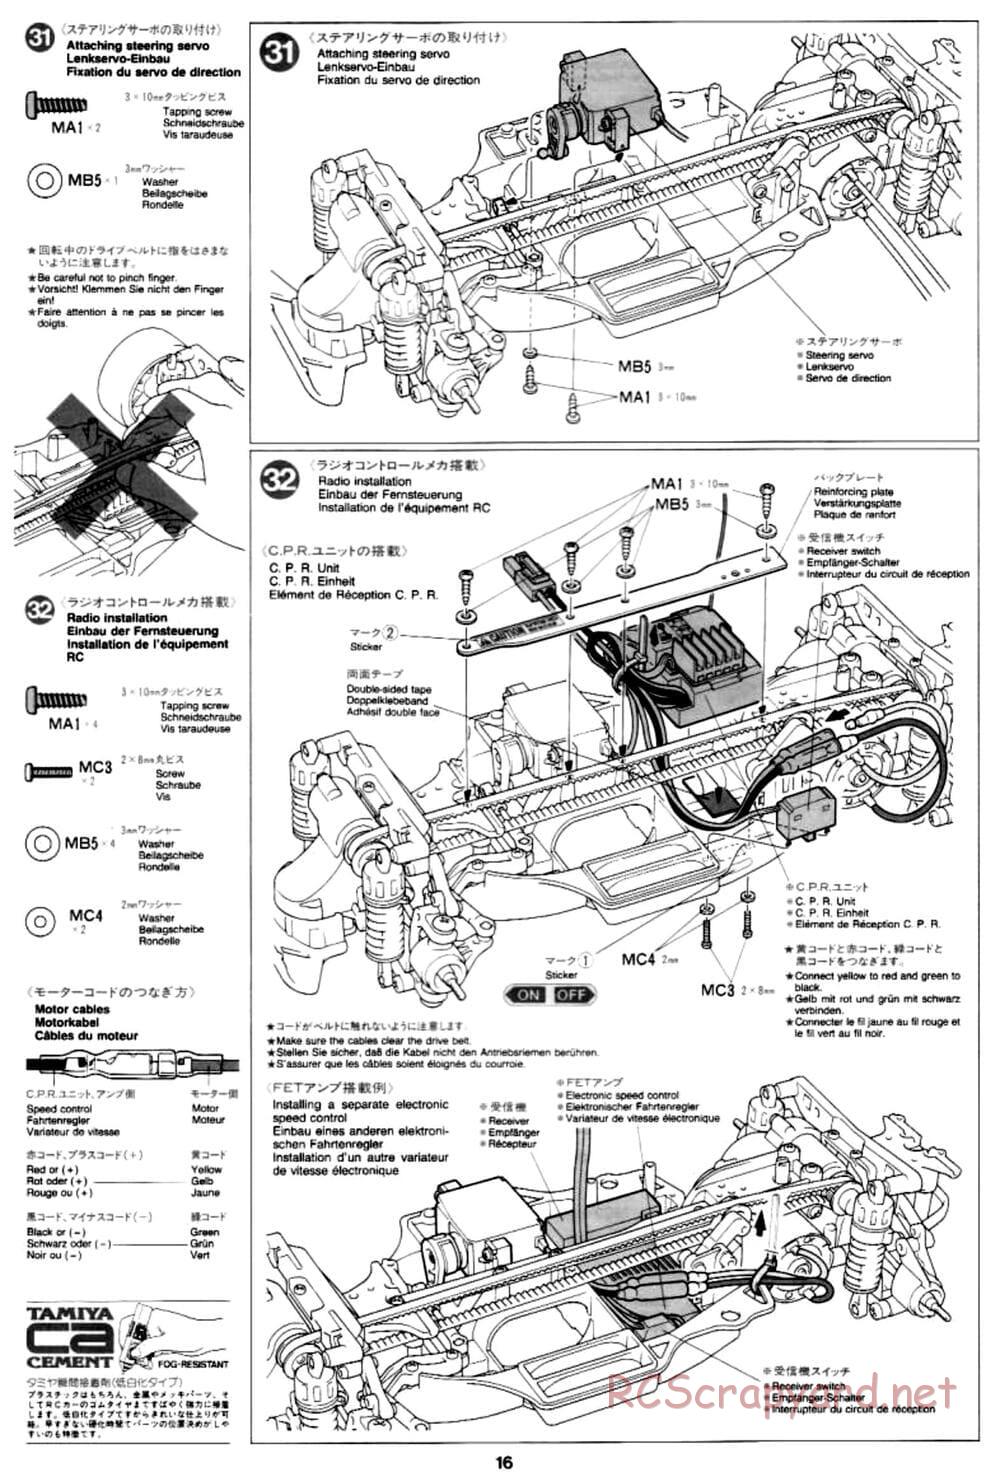 Tamiya - Mercedes CLK-GTR - TA-03R Chassis - Manual - Page 16